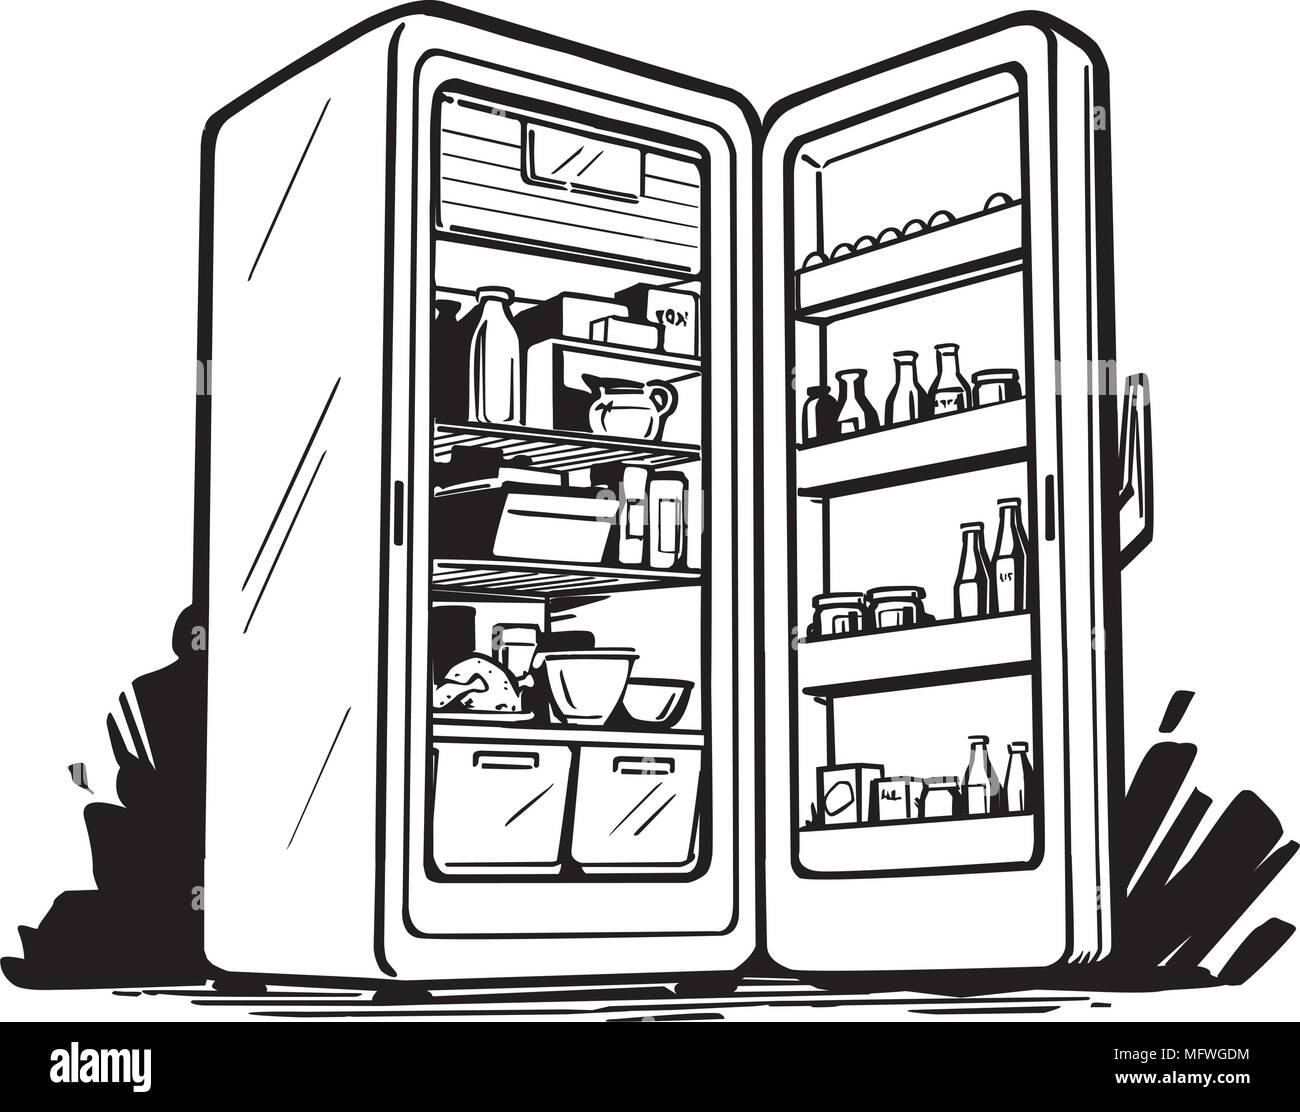 Öffnen Kühlschrank - Retro Clipart Illustration Stock-Vektorgrafik - Alamy